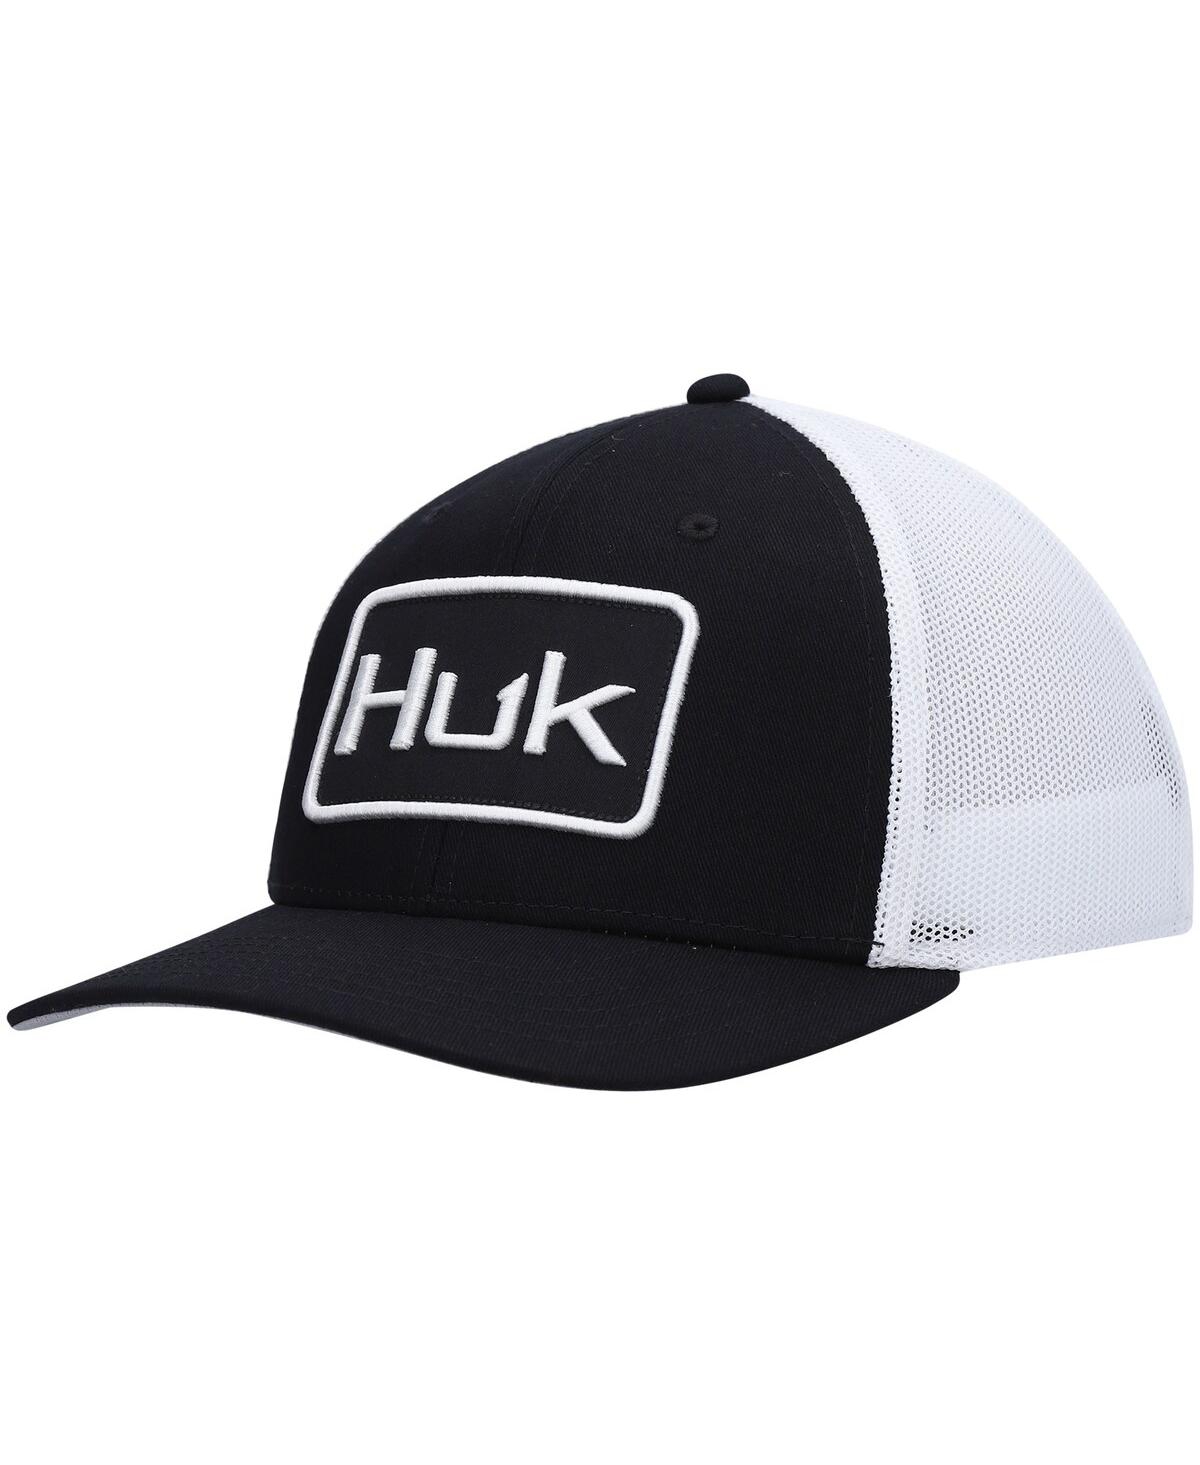 Huk Men's  Black Solid Trucker Flex Hat